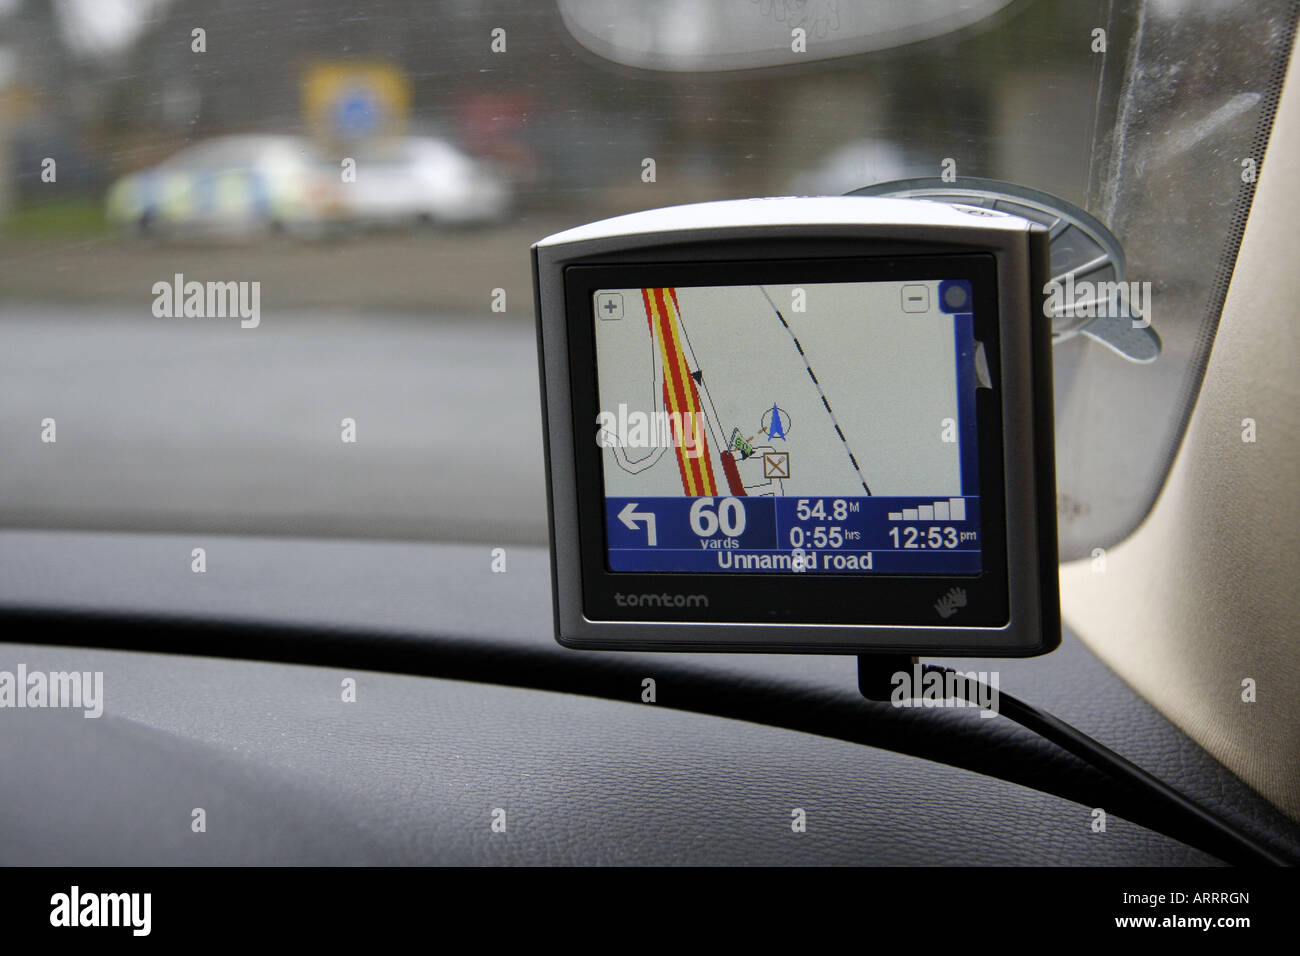 Satellite navigation display on a car dashboard Stock Photo